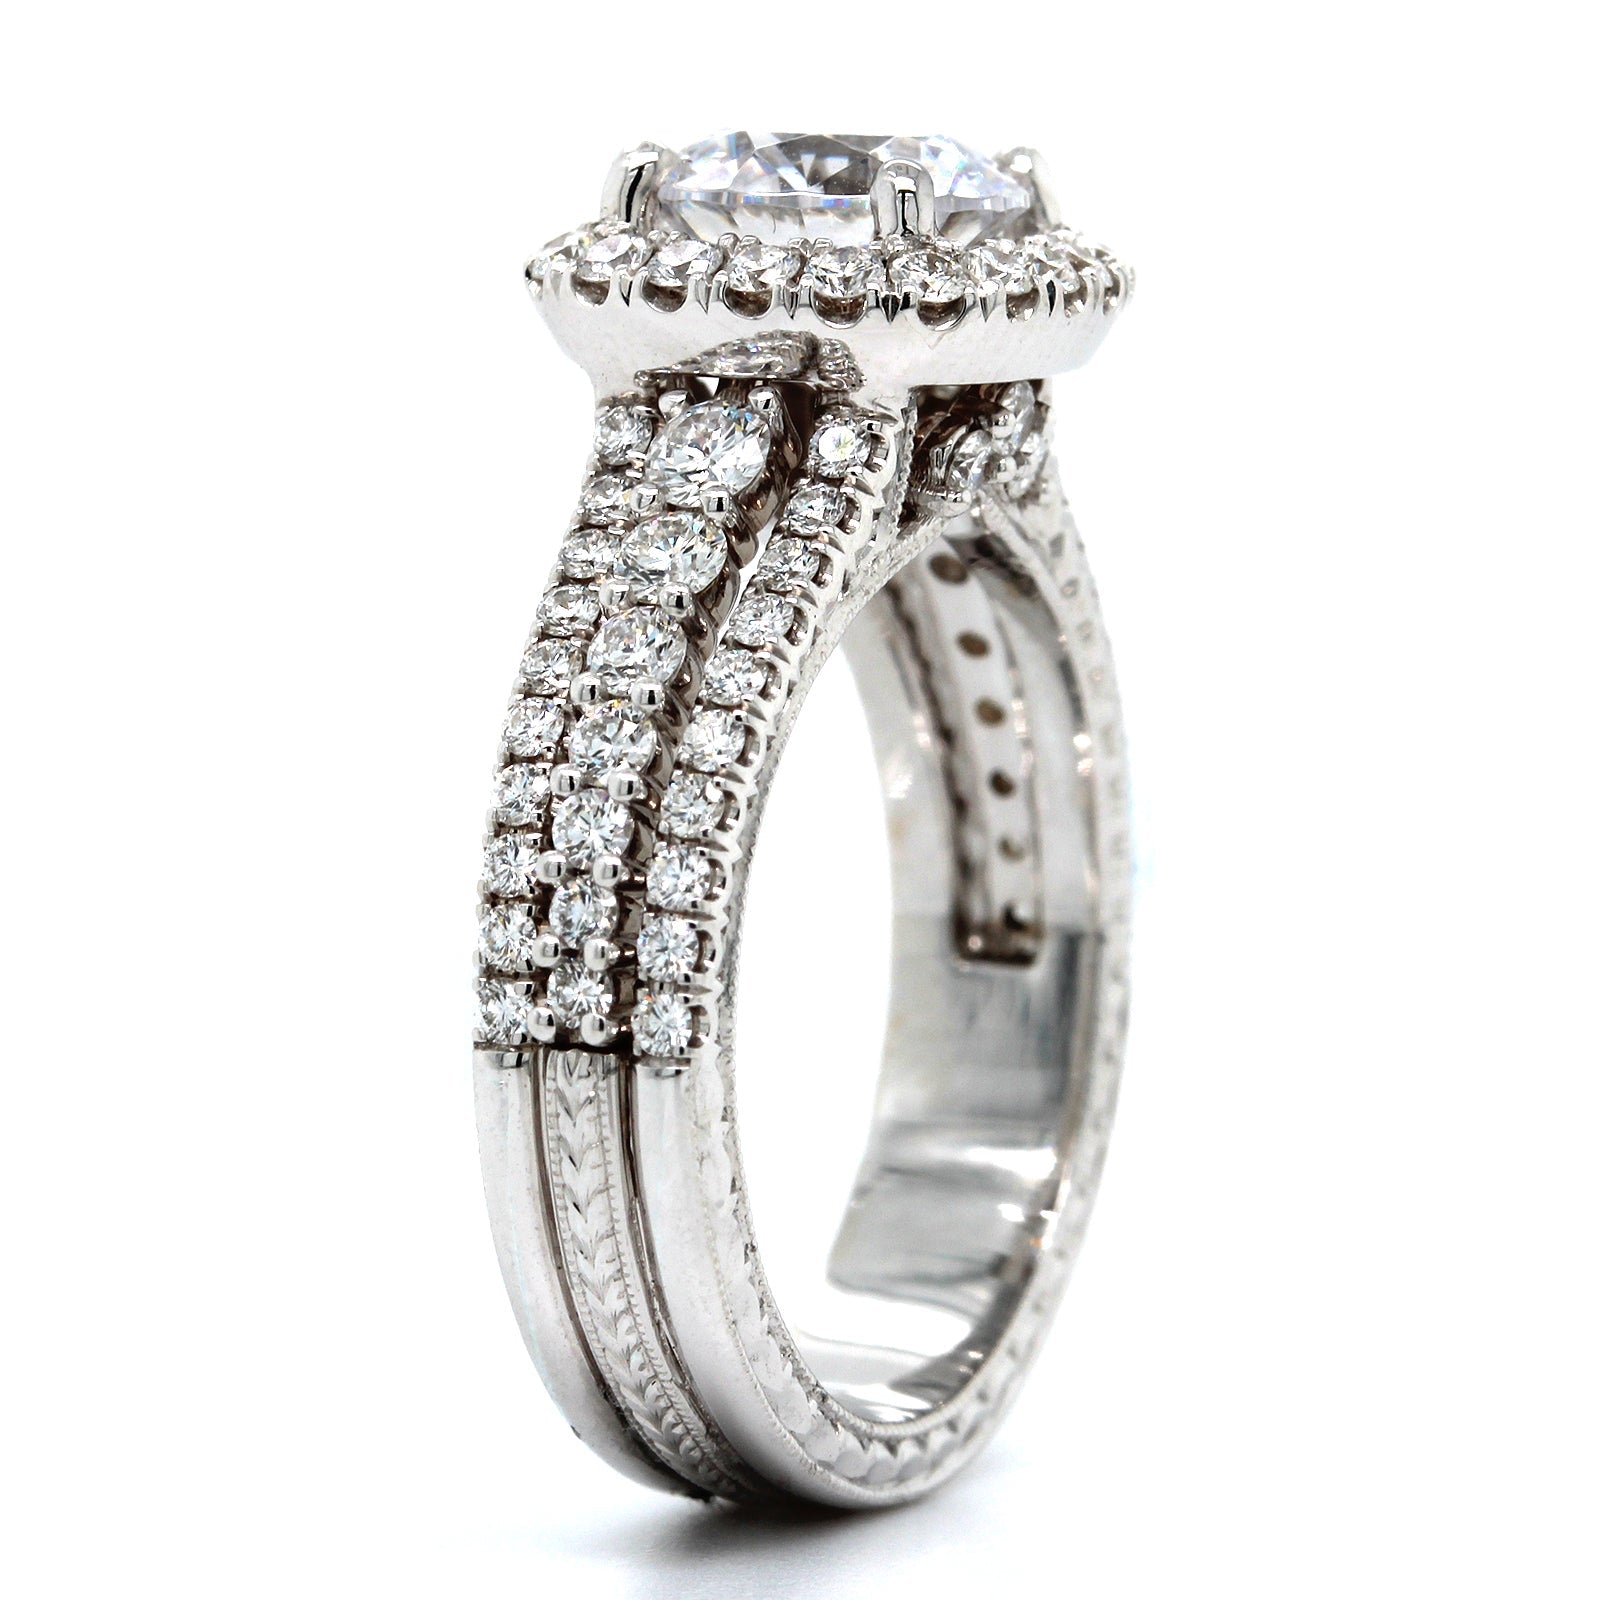 18K White Gold Cushion Diamond Halo 3 Row Engagement Ring Setting, 18k white gold, Long's Jewelers